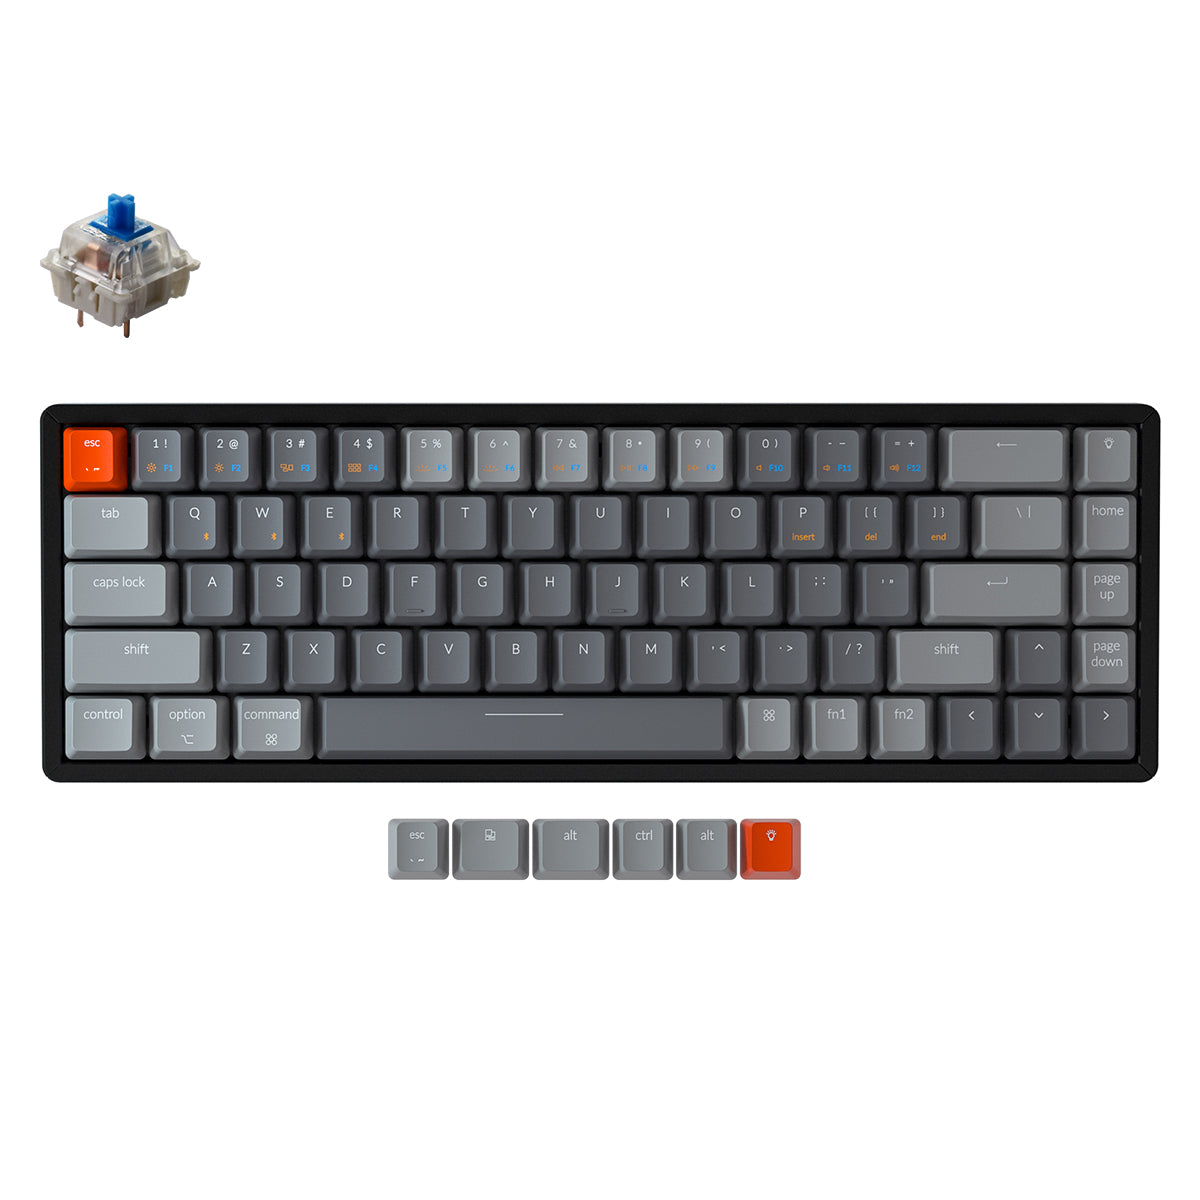 USB C Keyboard for Mac / PC - Full-Size